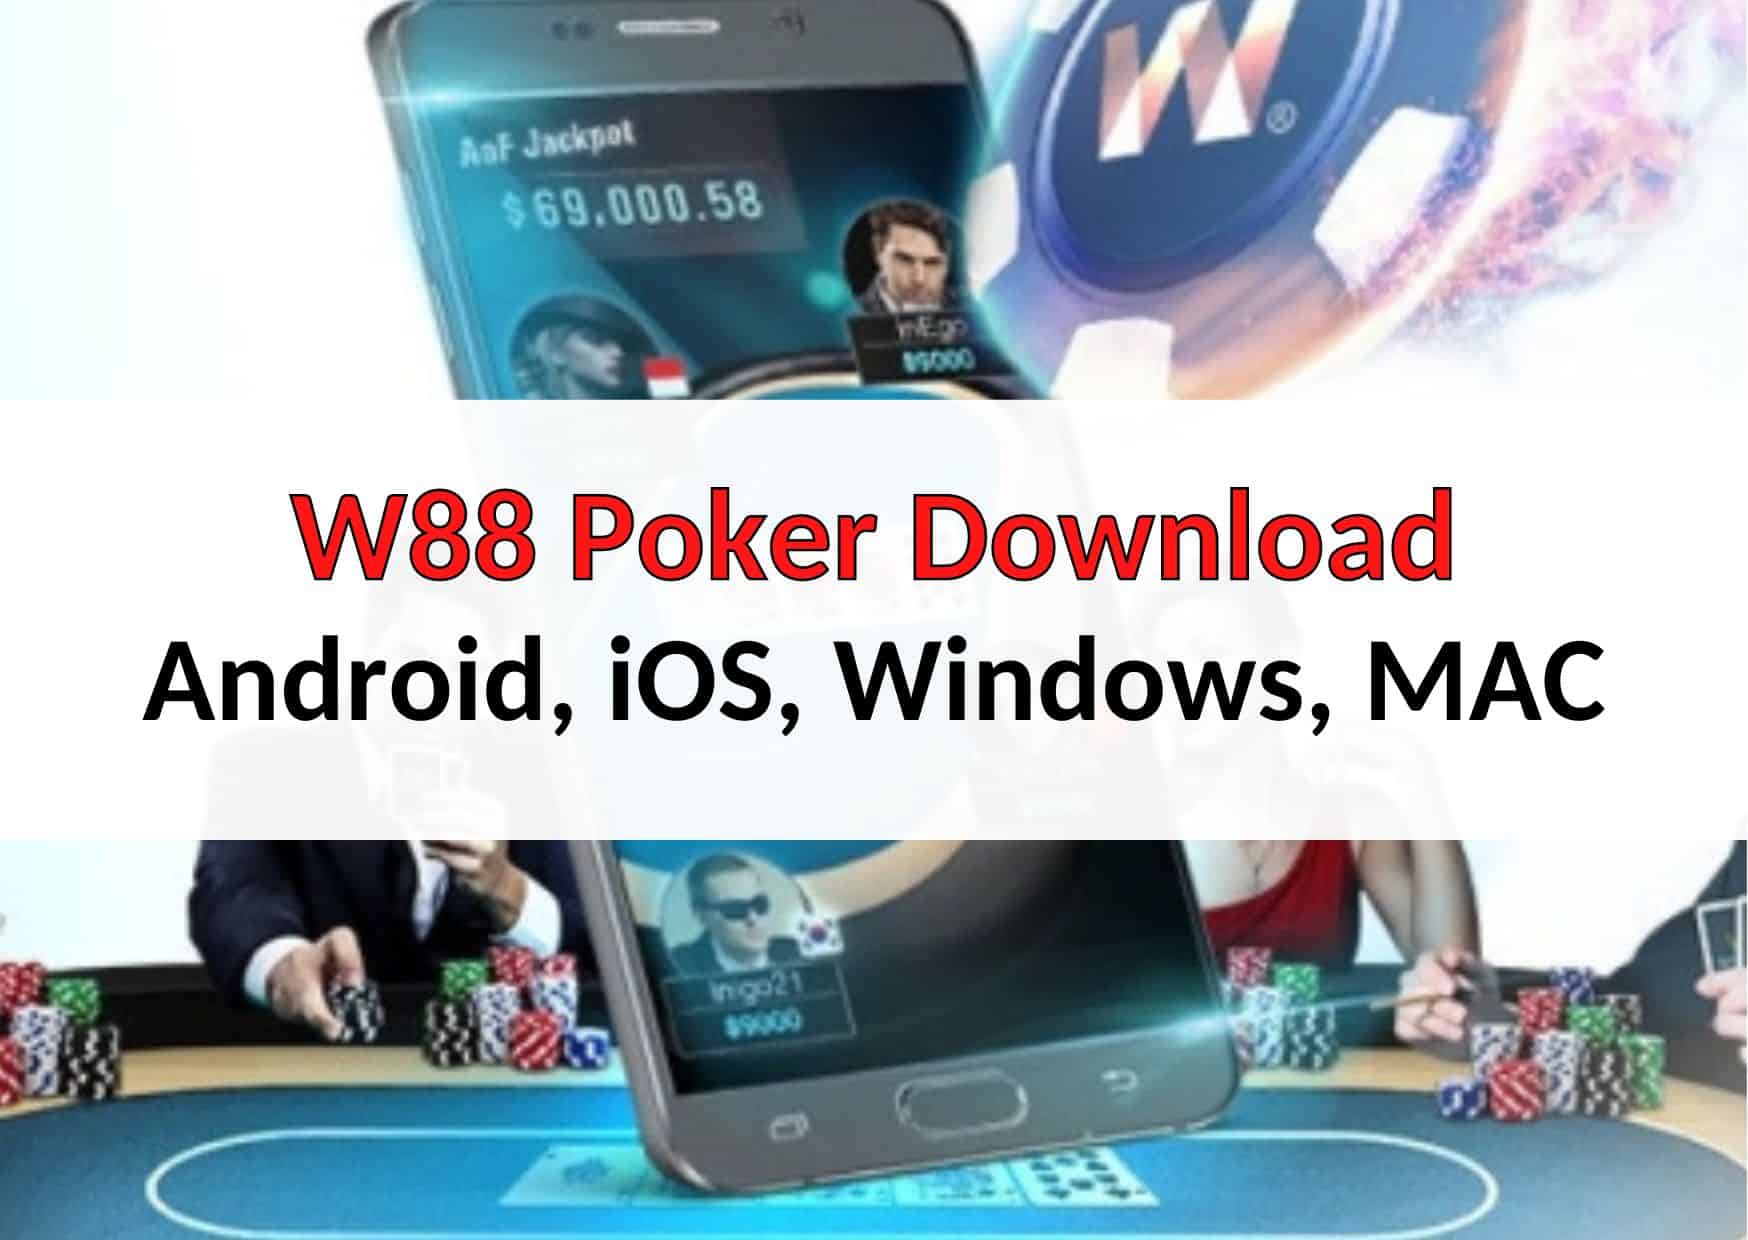 W88-poker-download-001